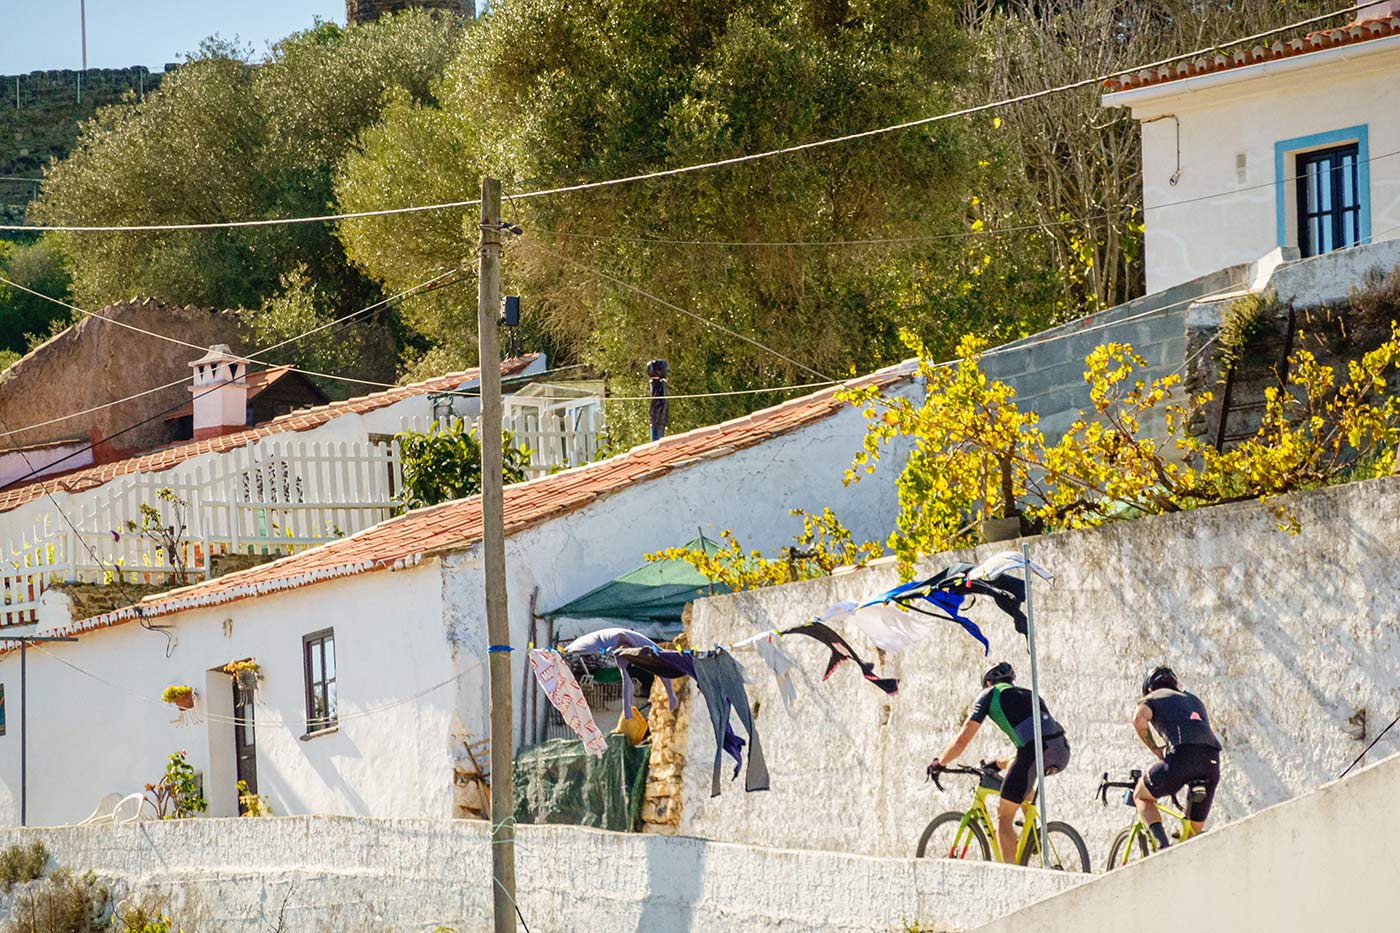 coastal riding riding through the forest on thomson gravel bike tour in portugal